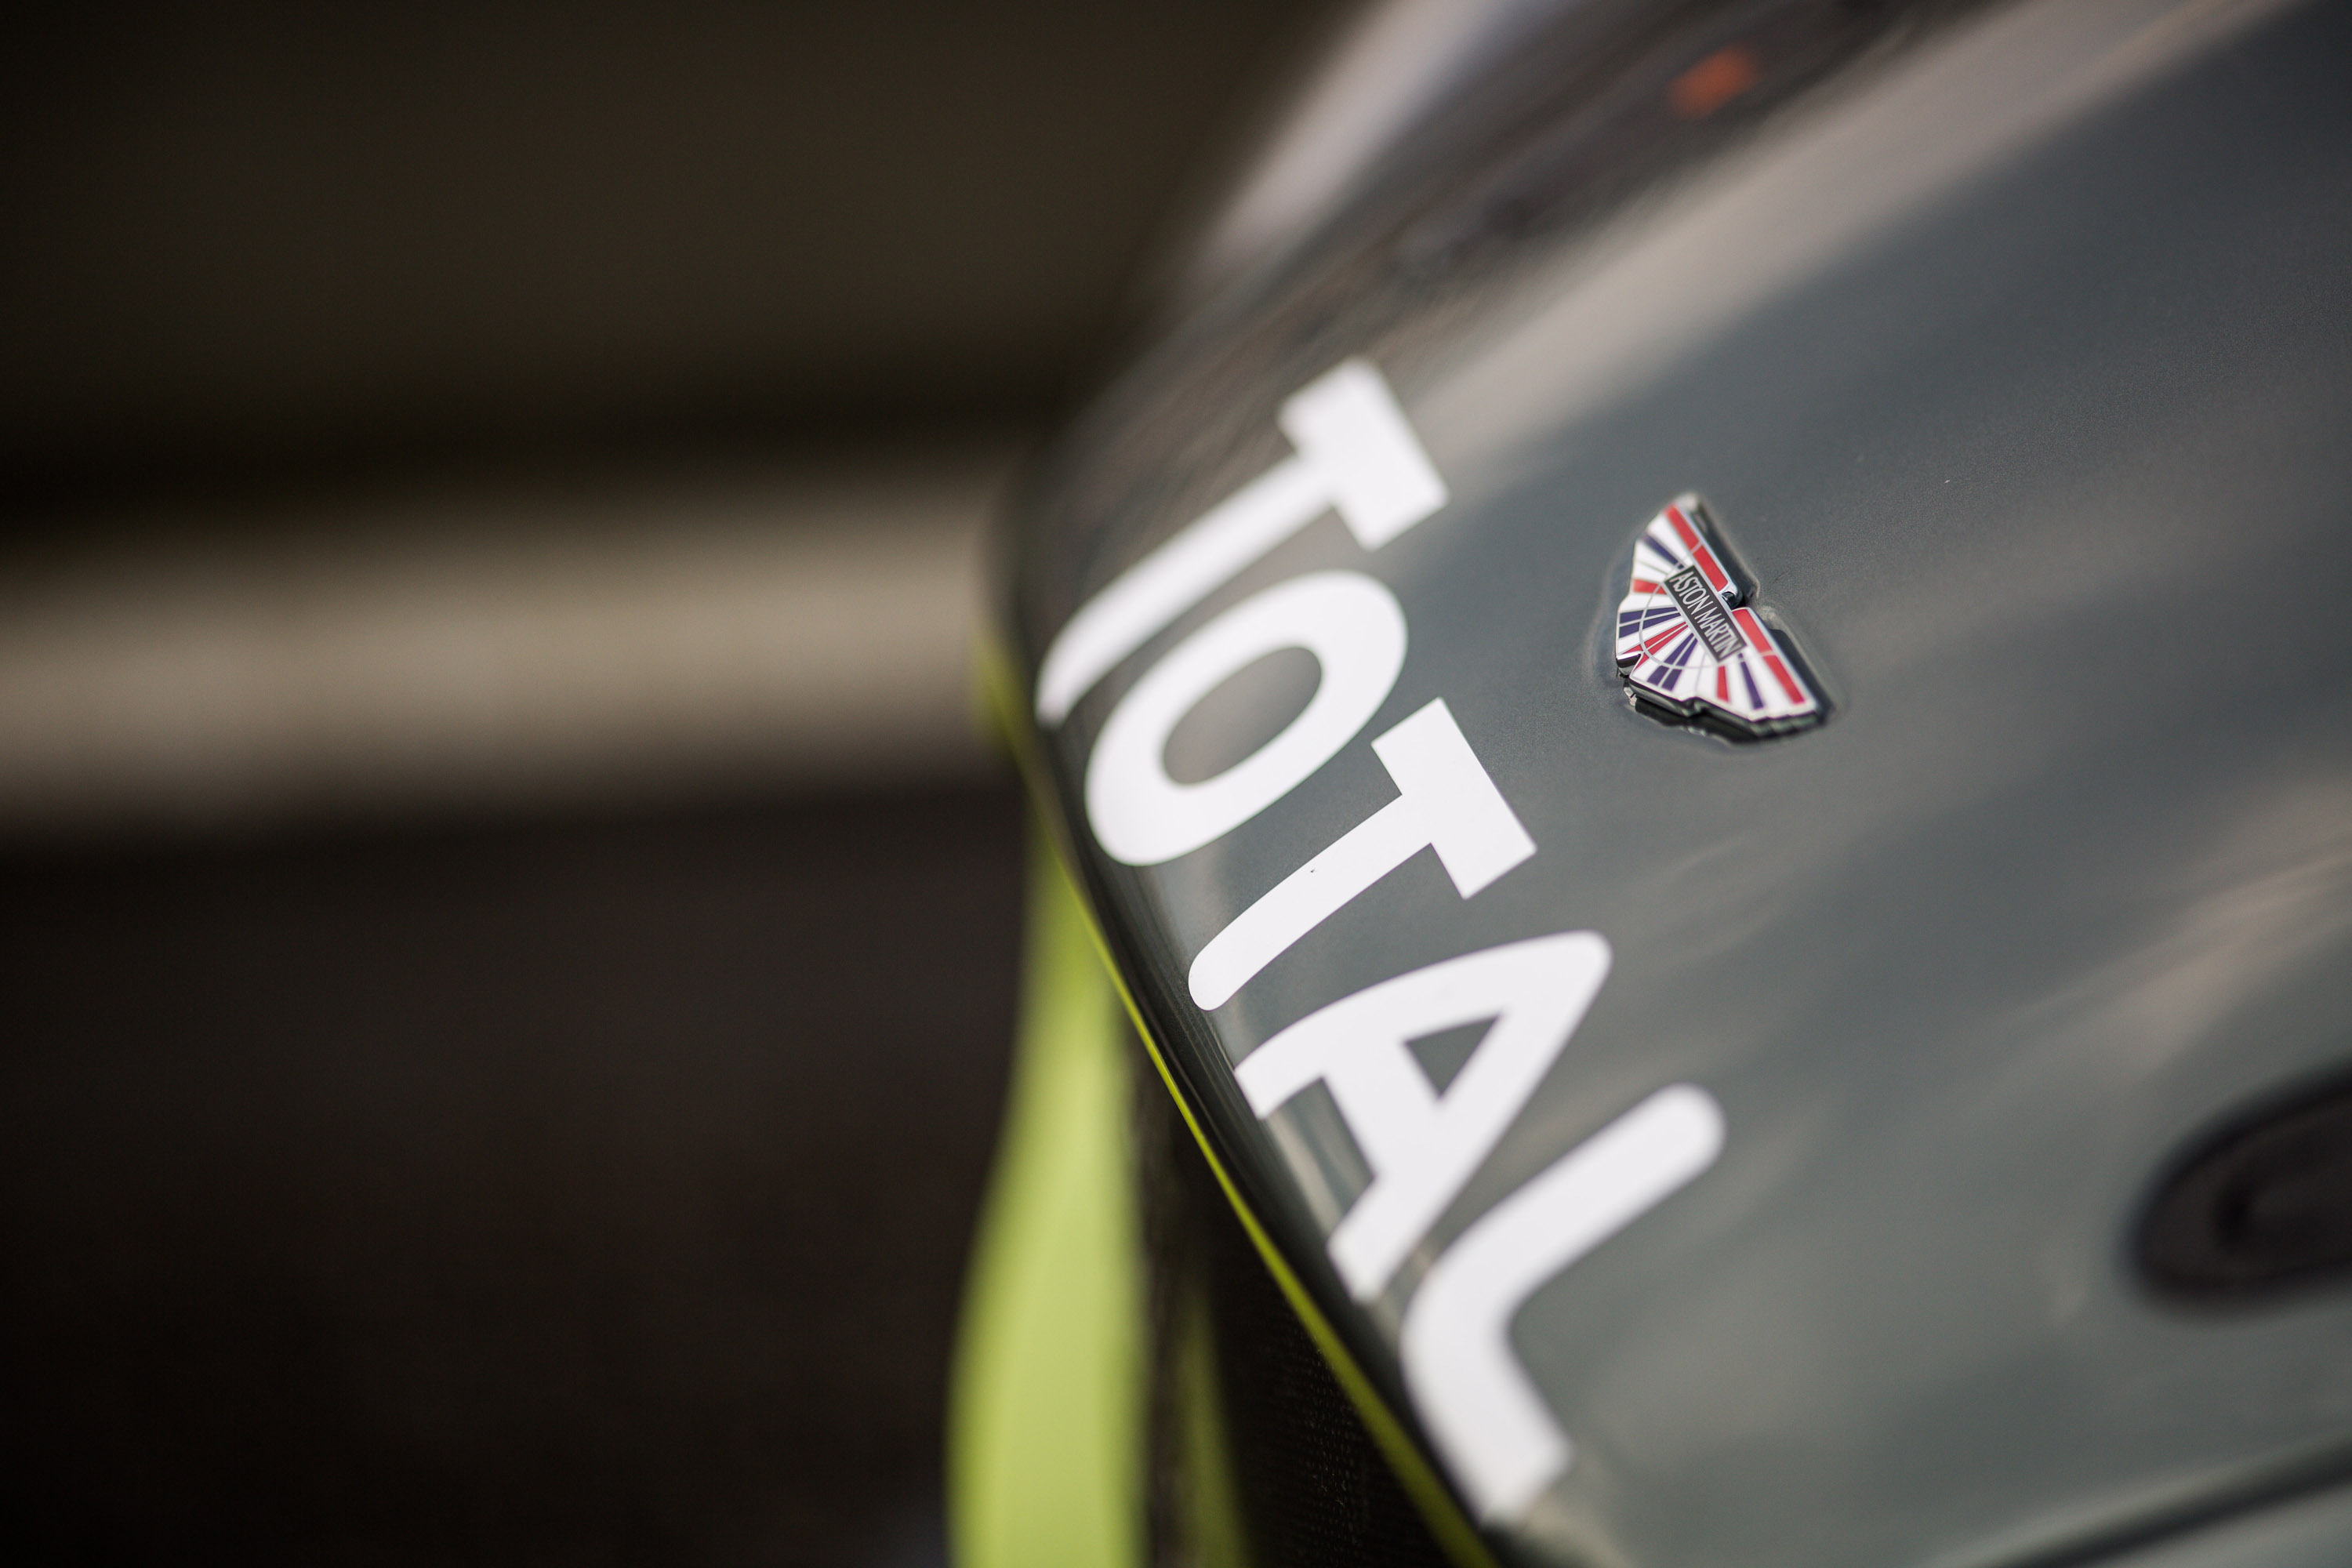 Aston Martin Sport - Total Alliance